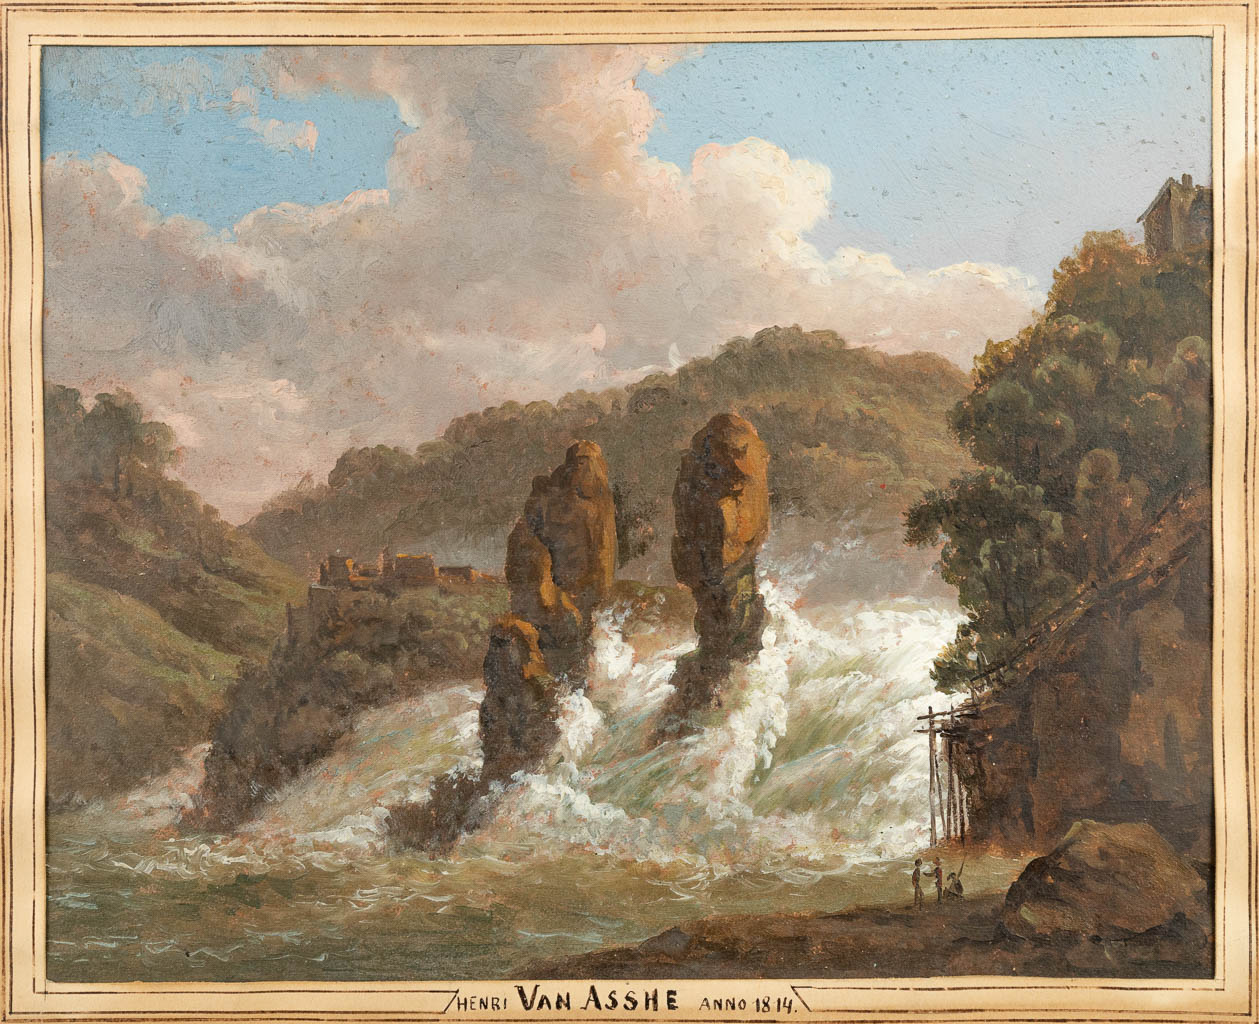 Henri VAN ASSCHE (1774-1841) 'The Waterfall' a painting, oil on paper. (26 x 20 cm)